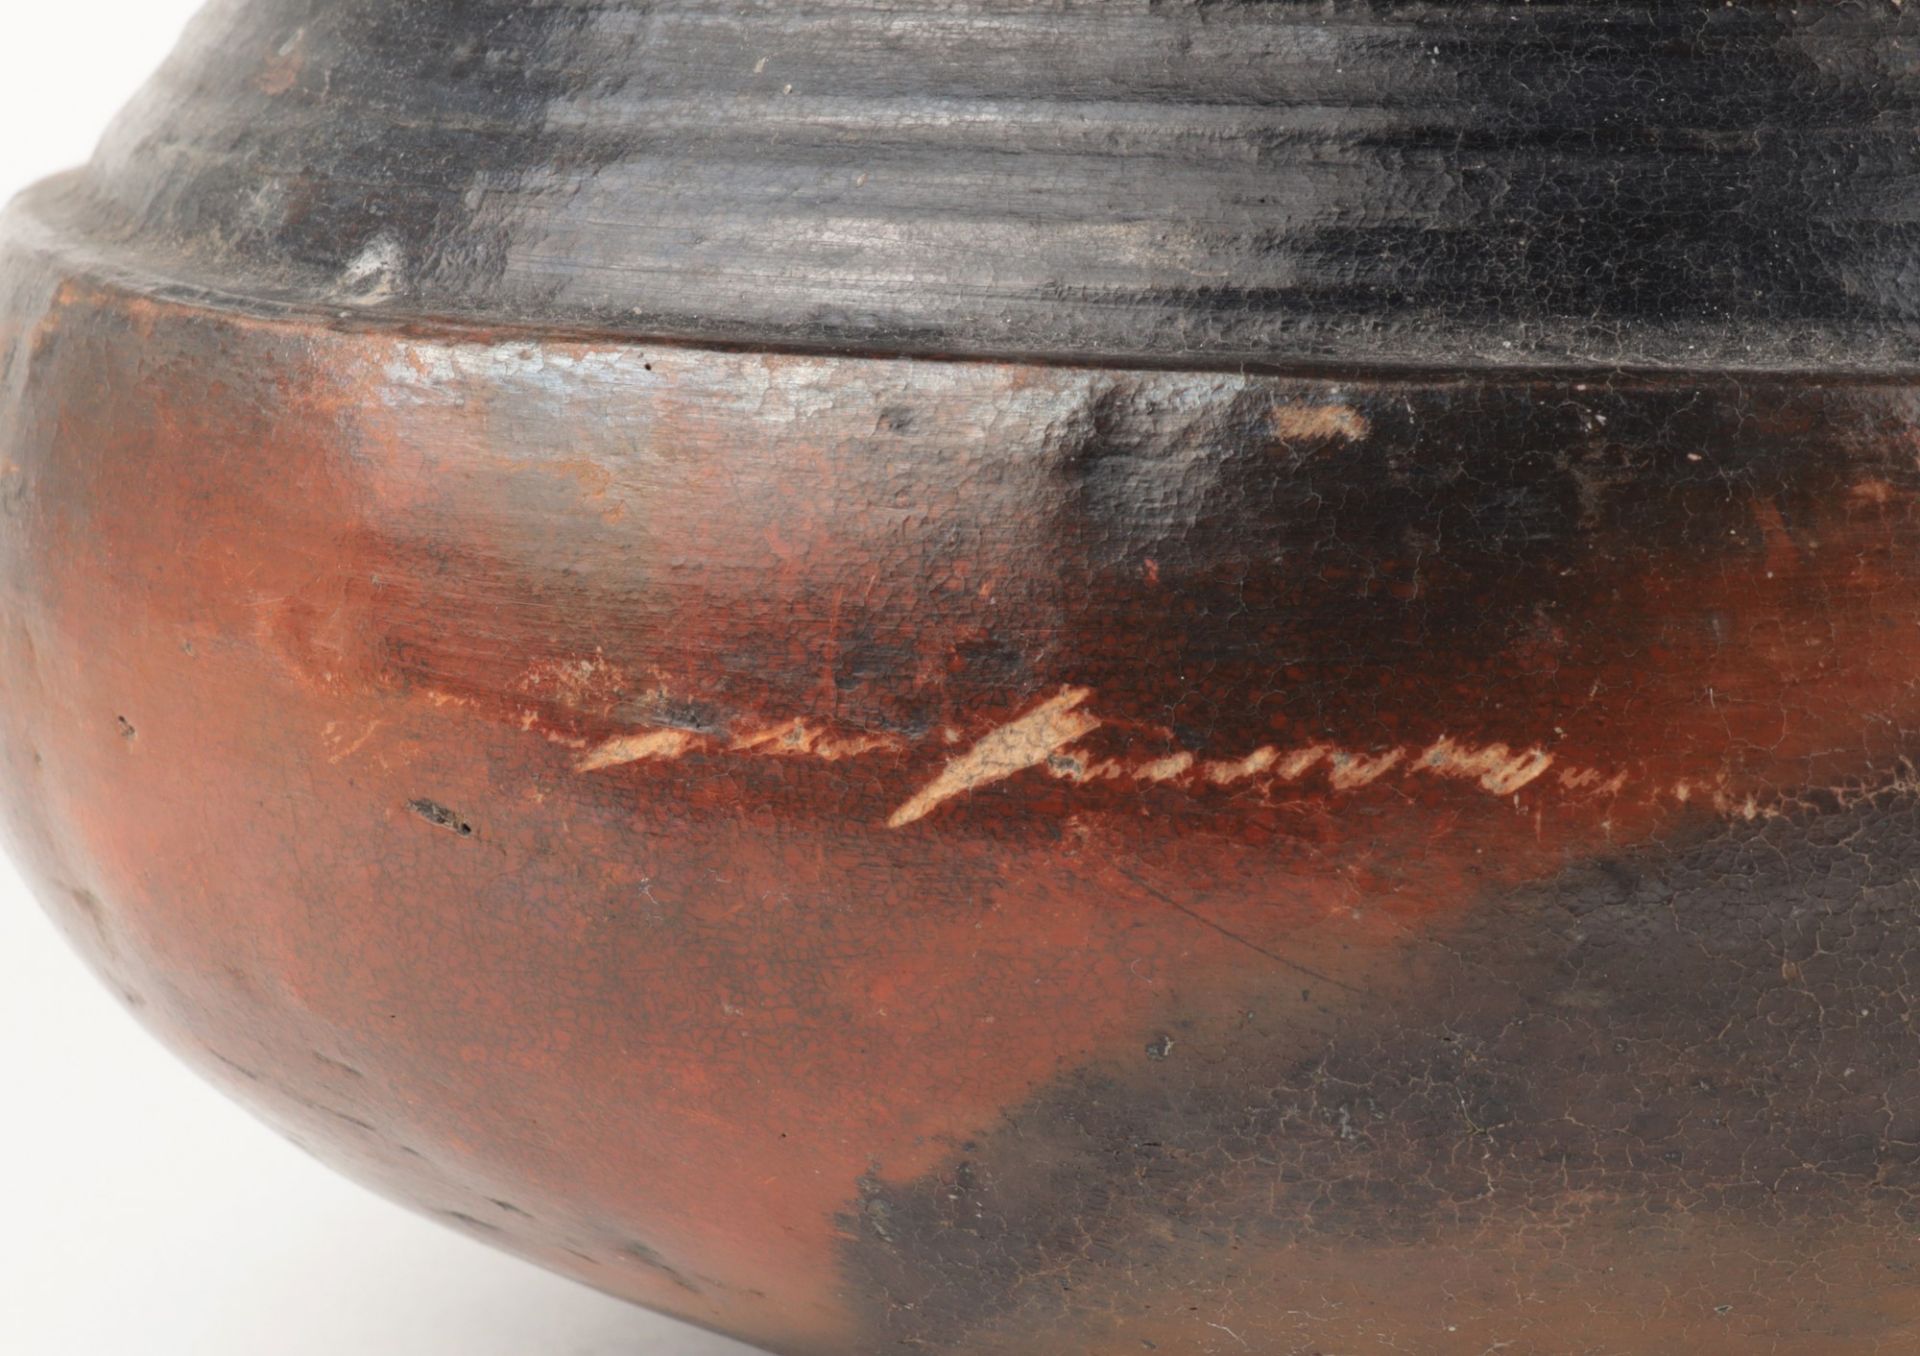 Afrika - Vorratstopf Keramik, rund, halbkugeliger Stand, gedrückte bauchiger Korpus, eingezogener - Image 3 of 4